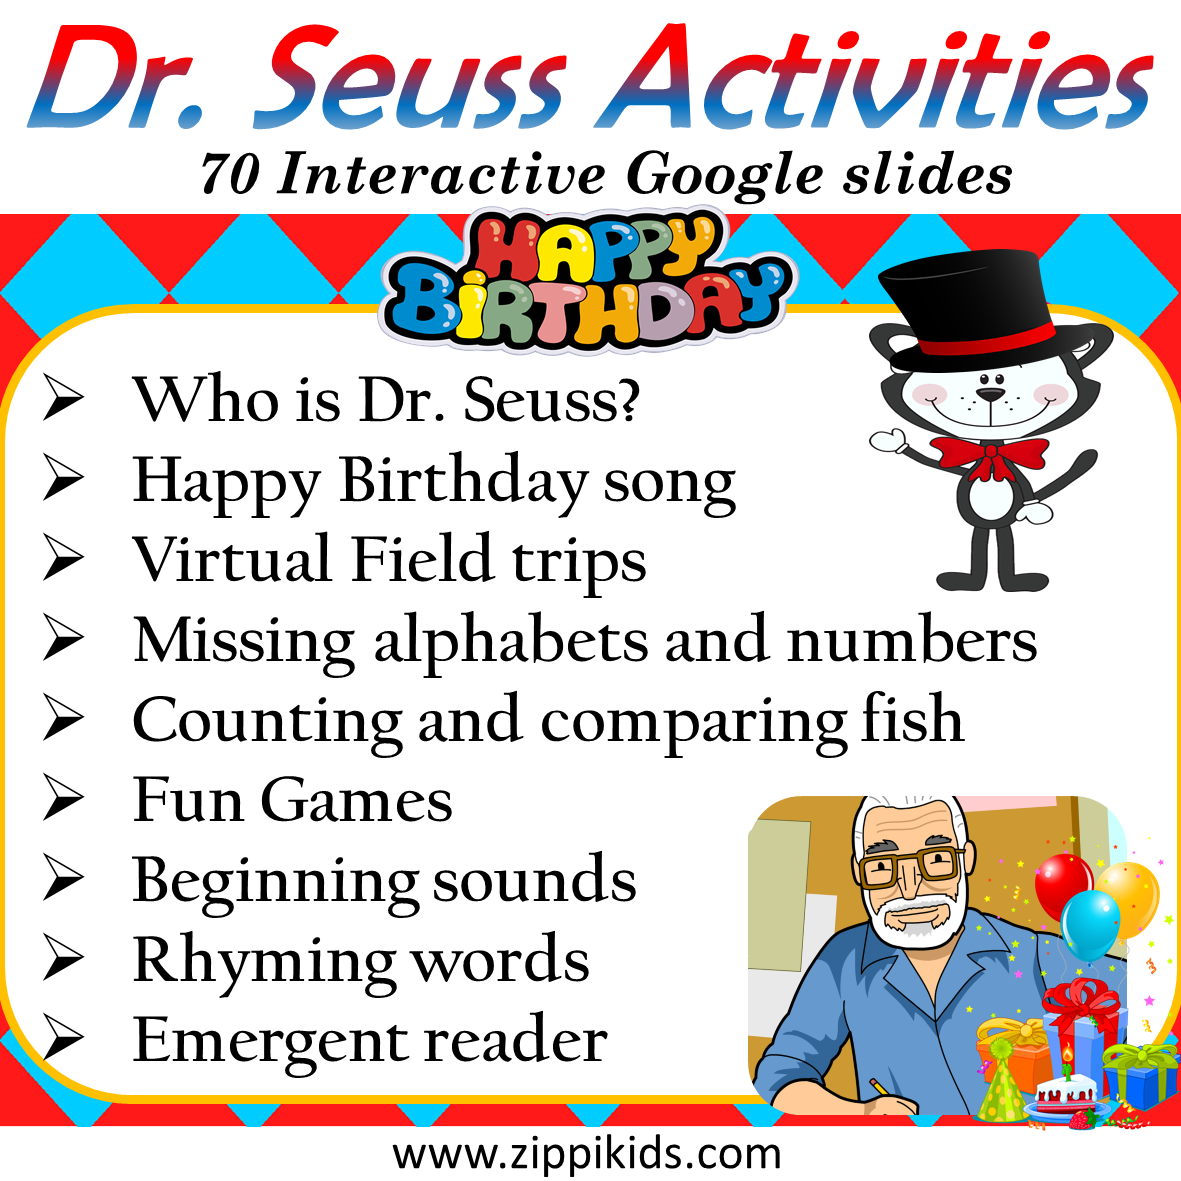 Dr. Seuss Virtual Field trip and Activities, Digital Dr. Seuss Day - 70 Google Slides